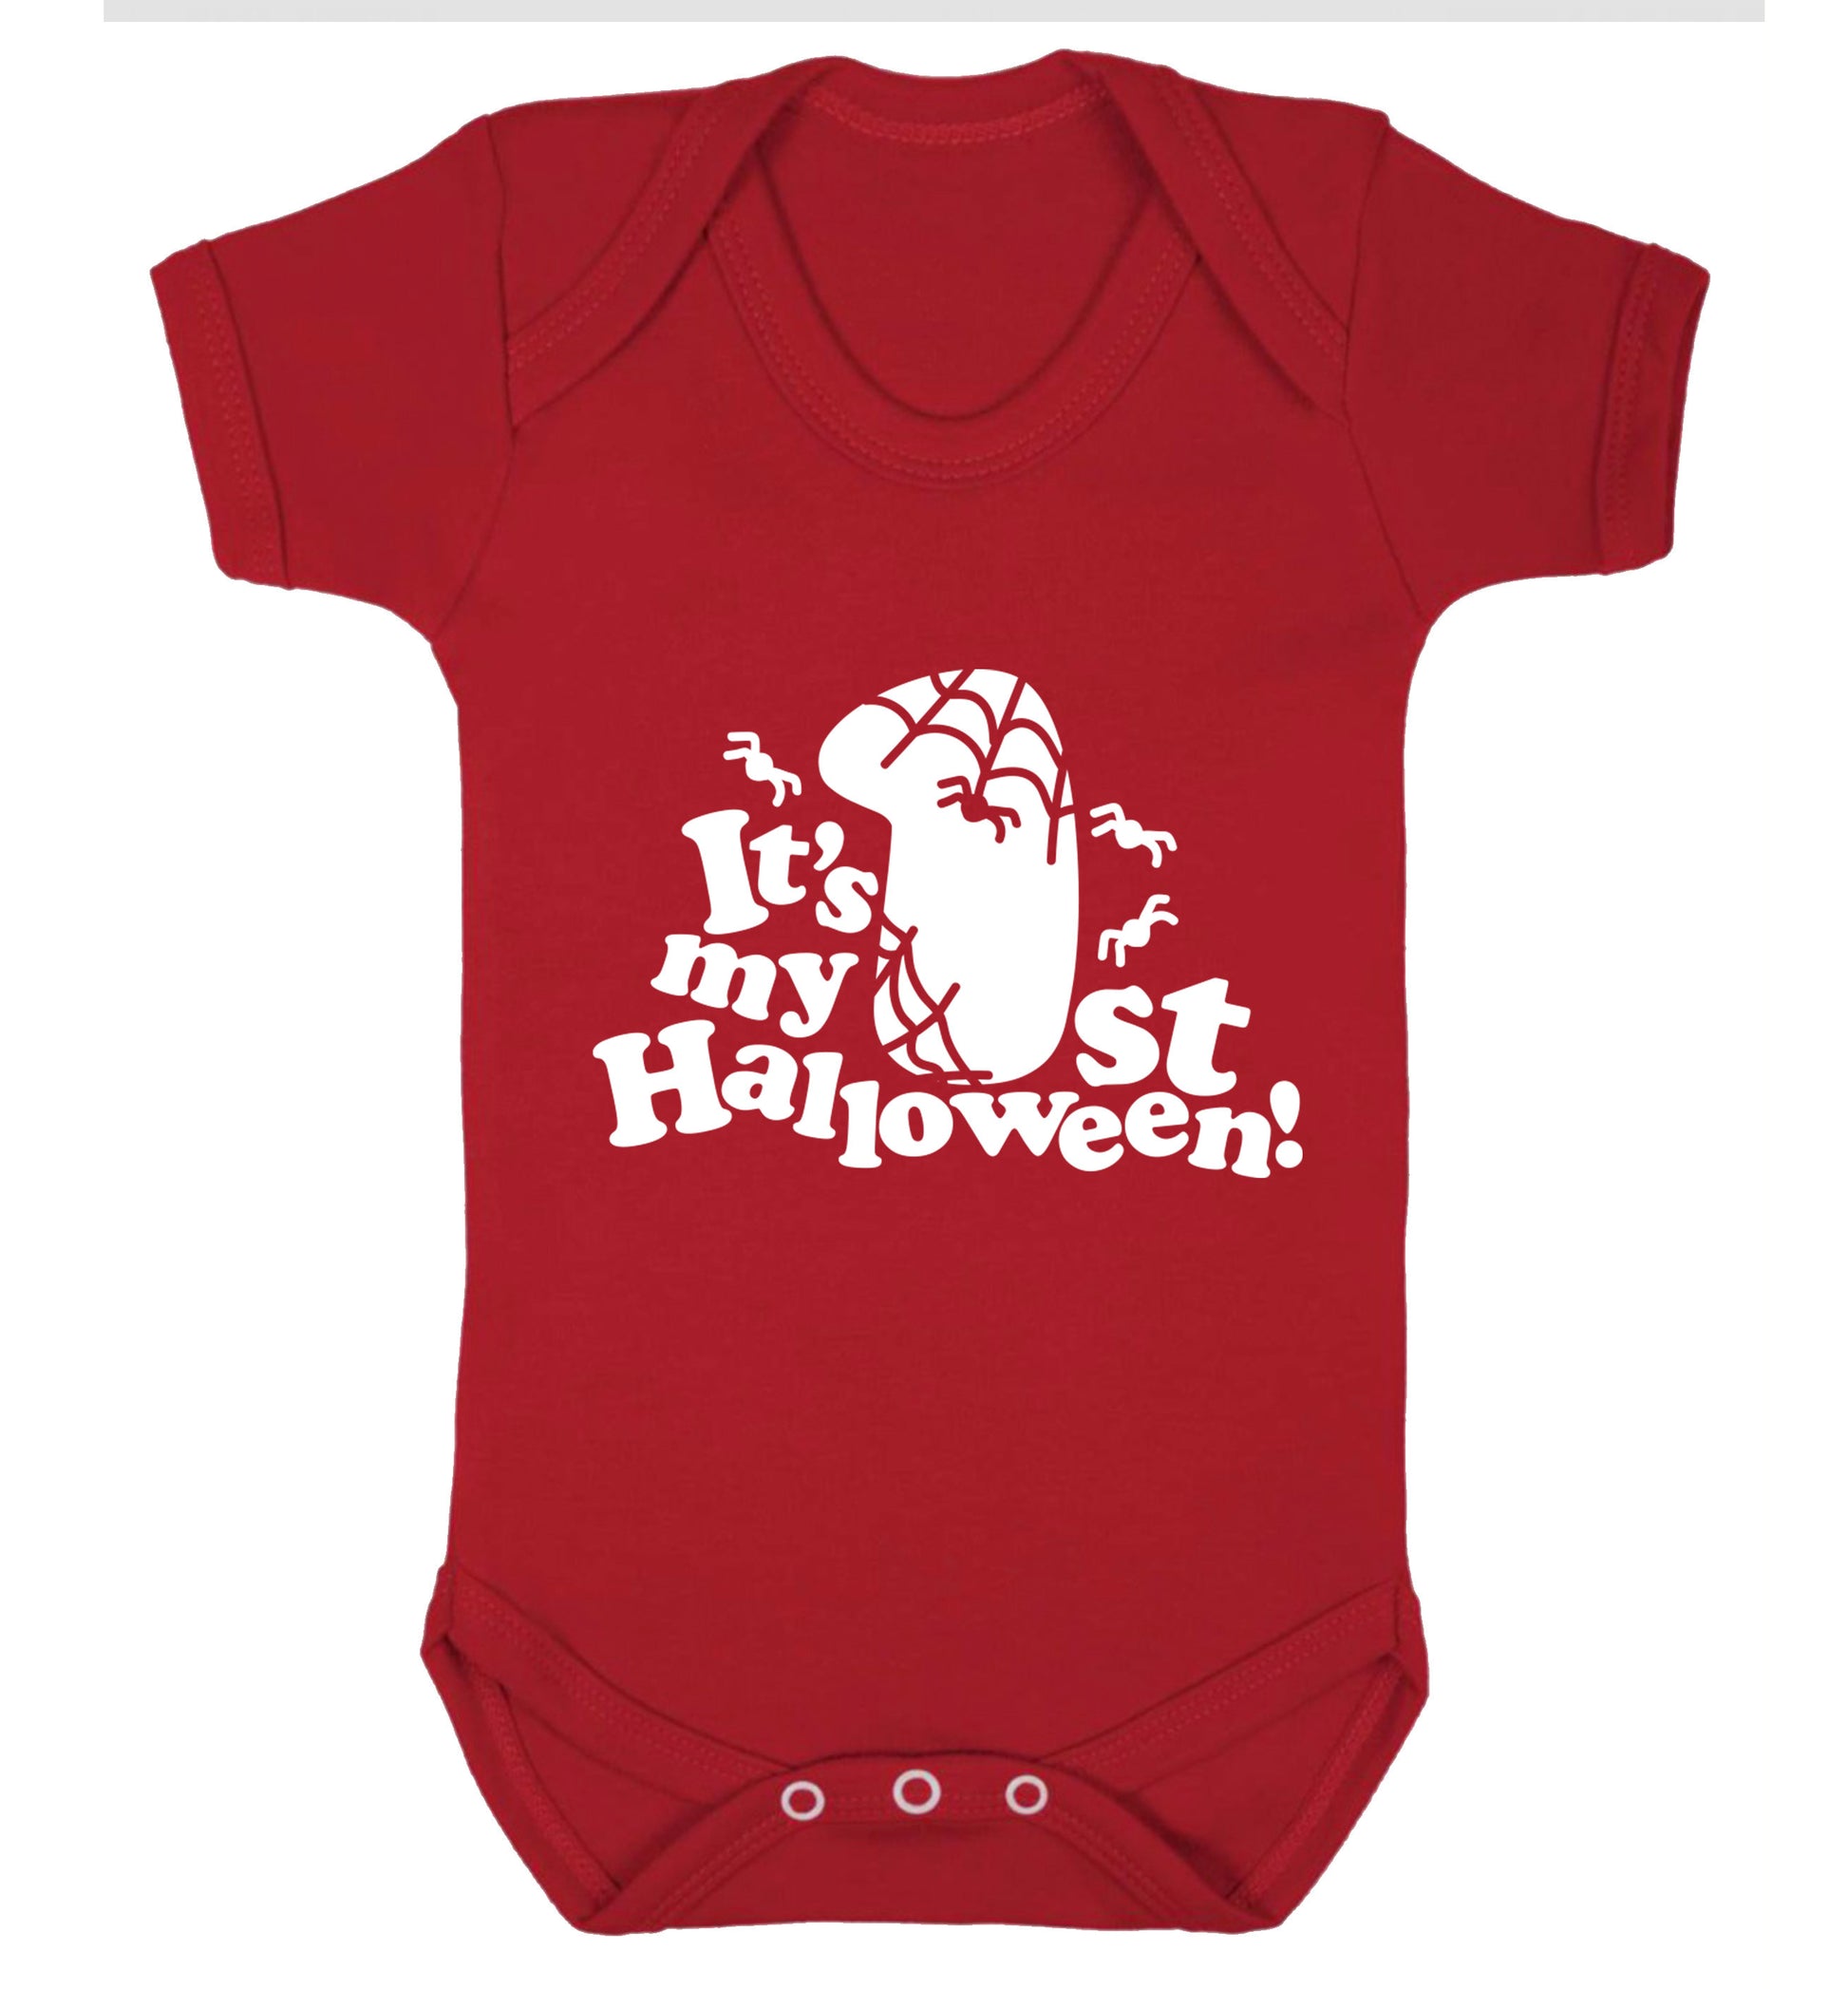 1st Halloween Baby Vest red 18-24 months